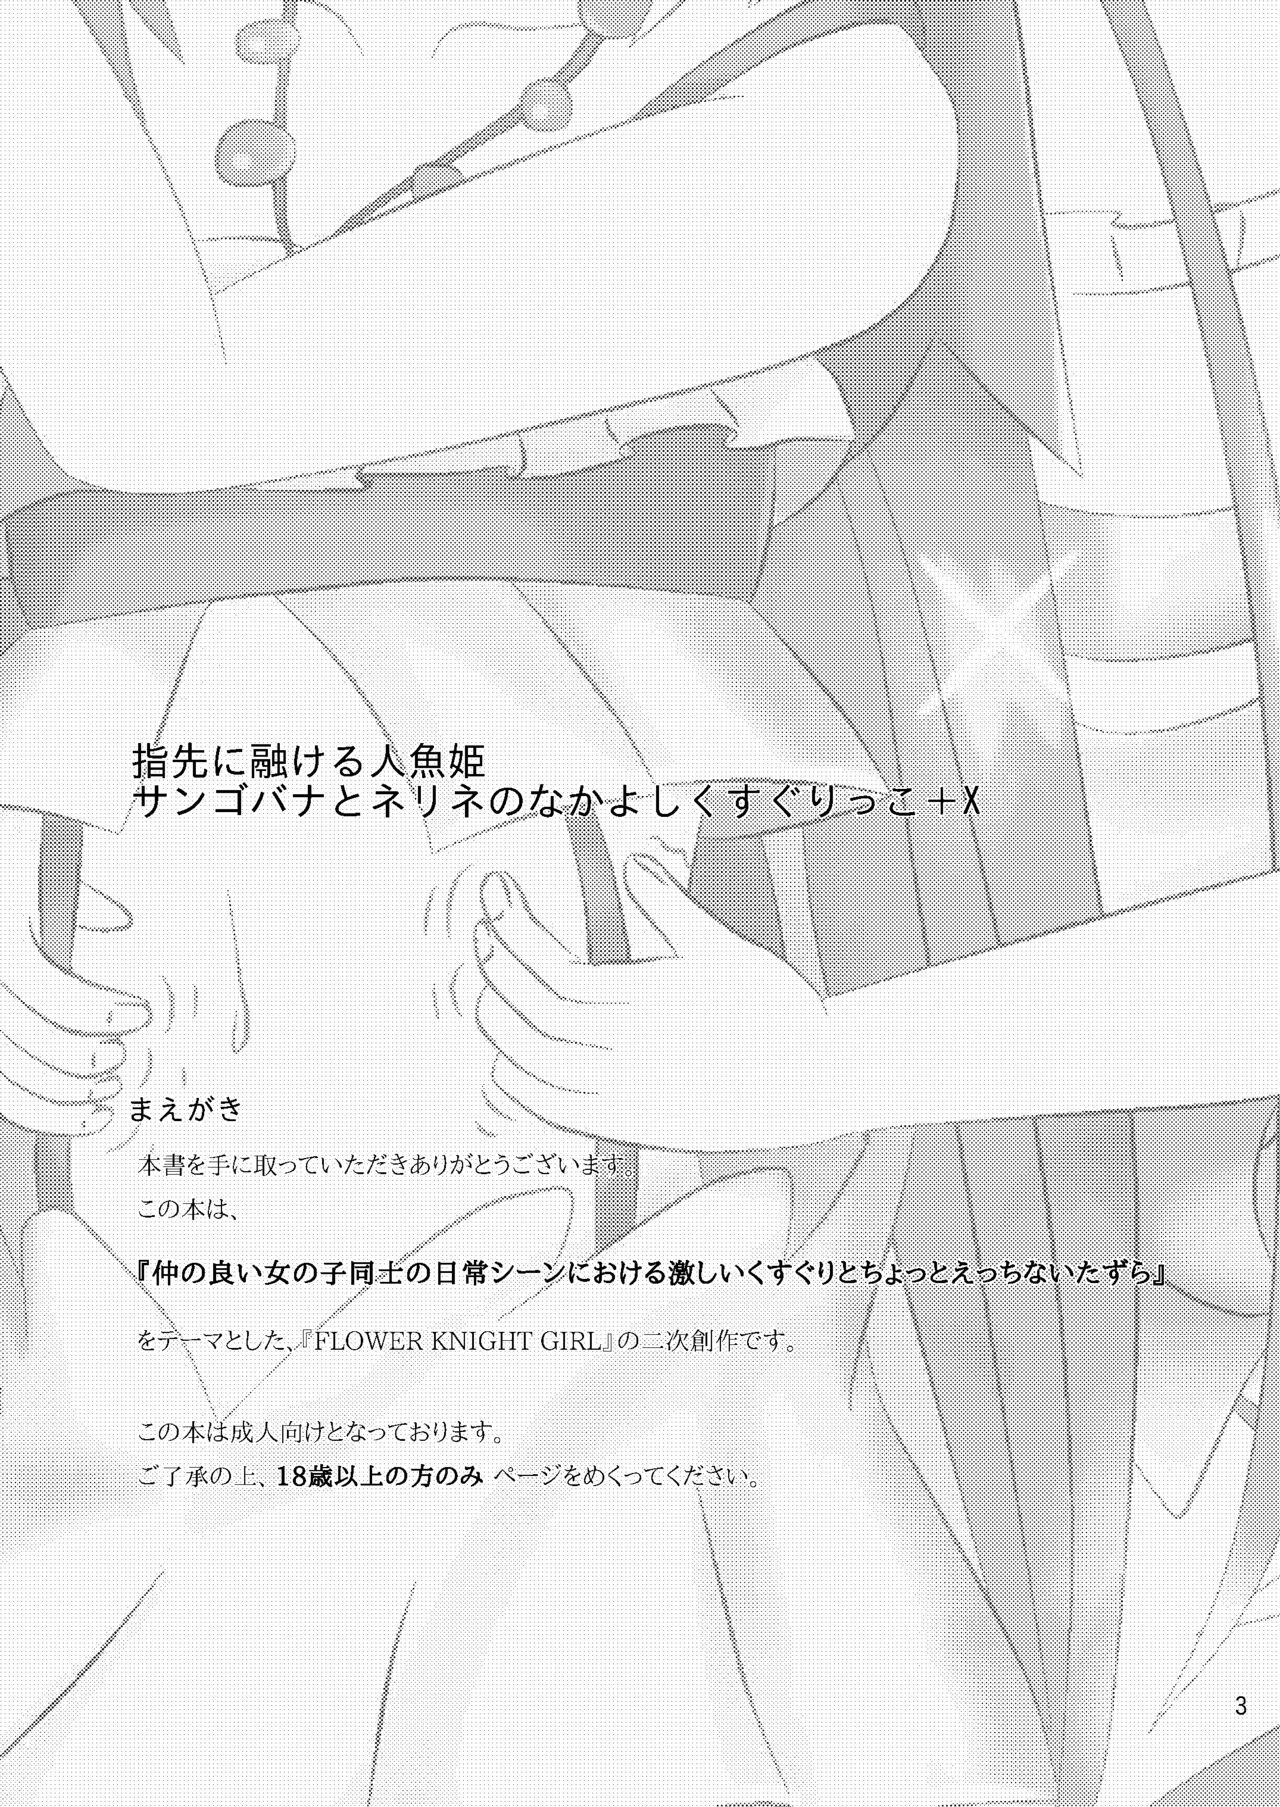 Celebrity Nudes Yubisaki ni Tokeru Ningyohime - Sangobana to Nerine no Nakayoshi Kusugurikko + X - Flower knight girl Short - Page 3